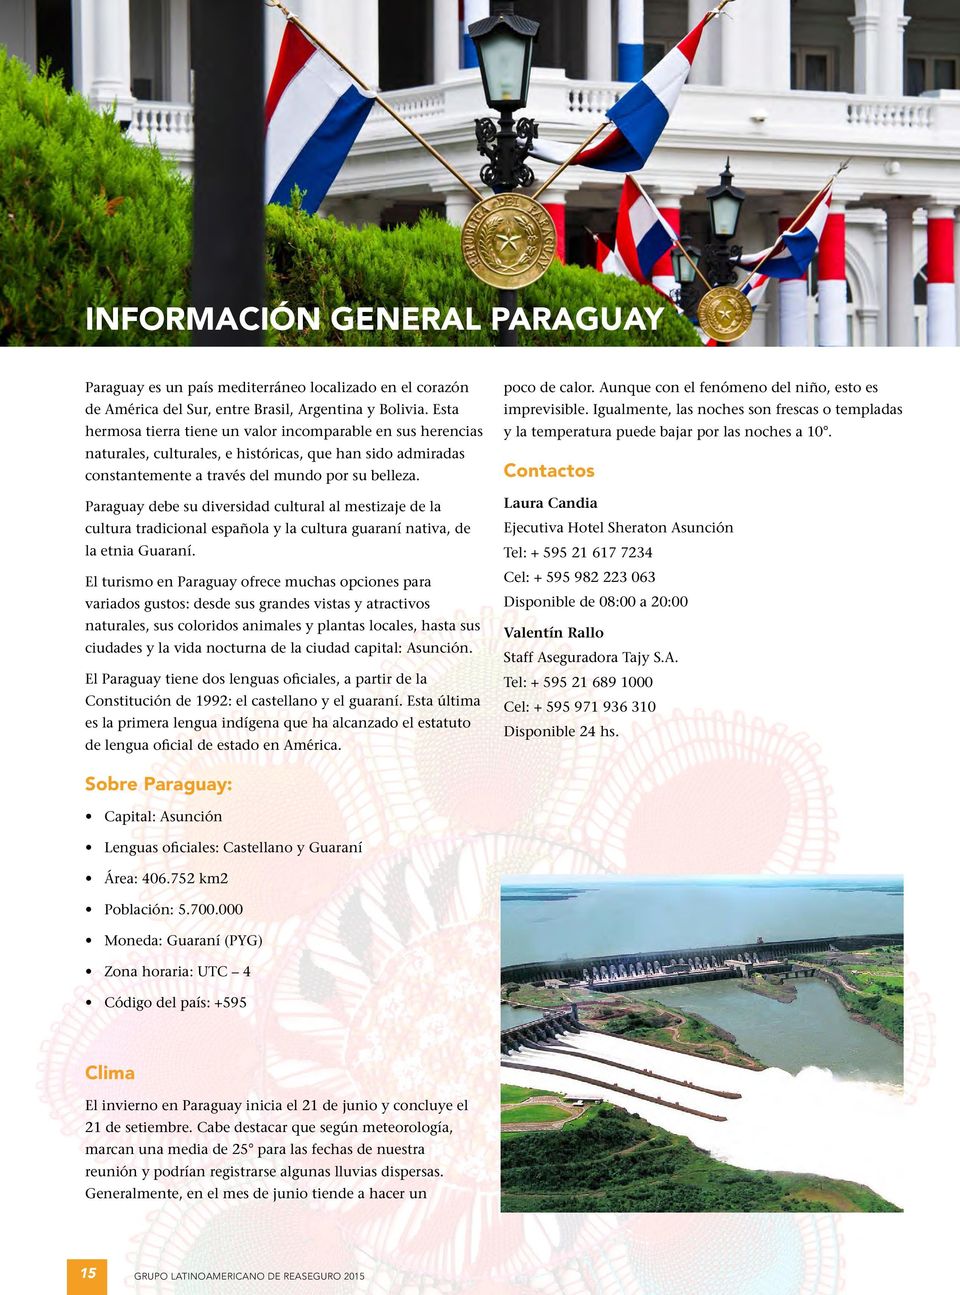 Paraguay debe su diversidad cultural al mestizaje de la cultura tradicional española y la cultura guaraní nativa, de la etnia Guaraní.